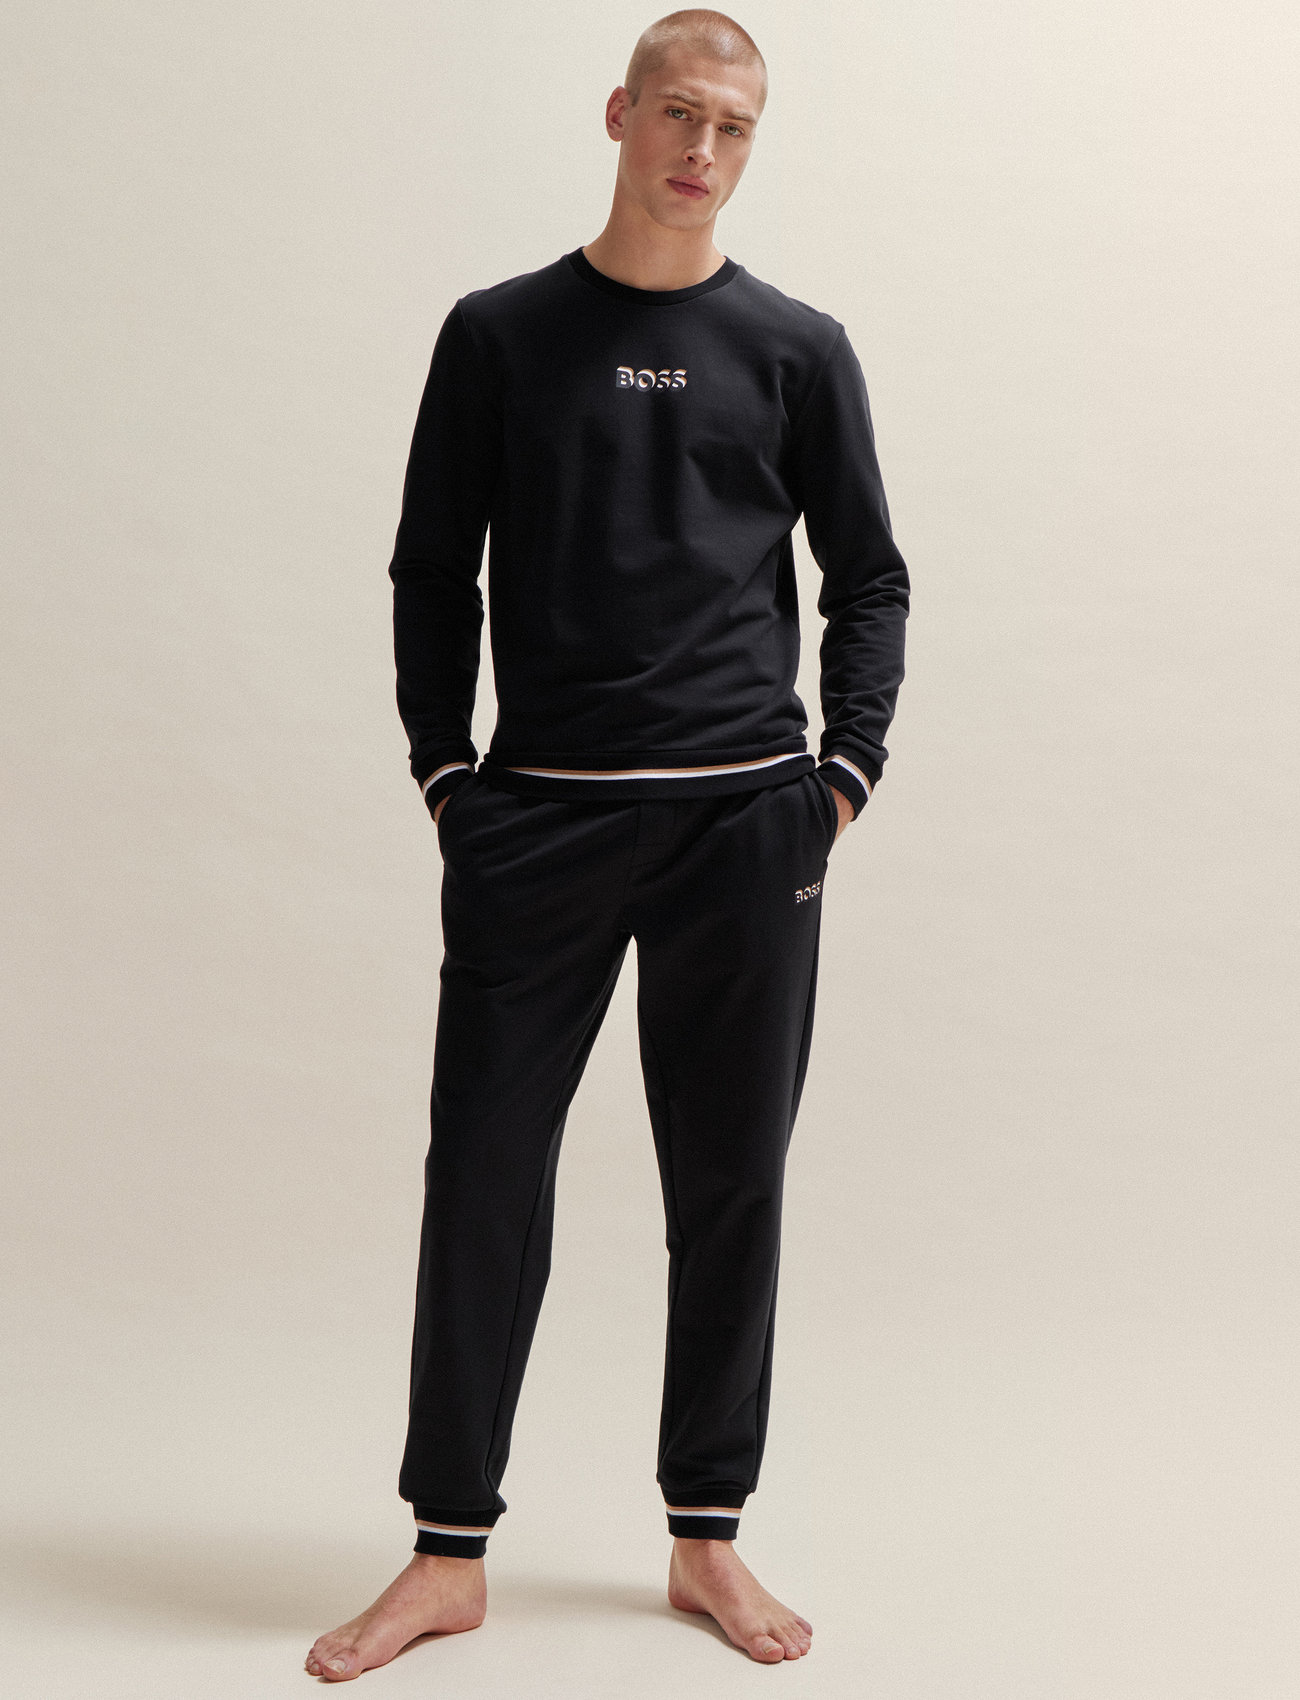 BOSS - Iconic Sweatshirt - pyjamashirts - black - 1